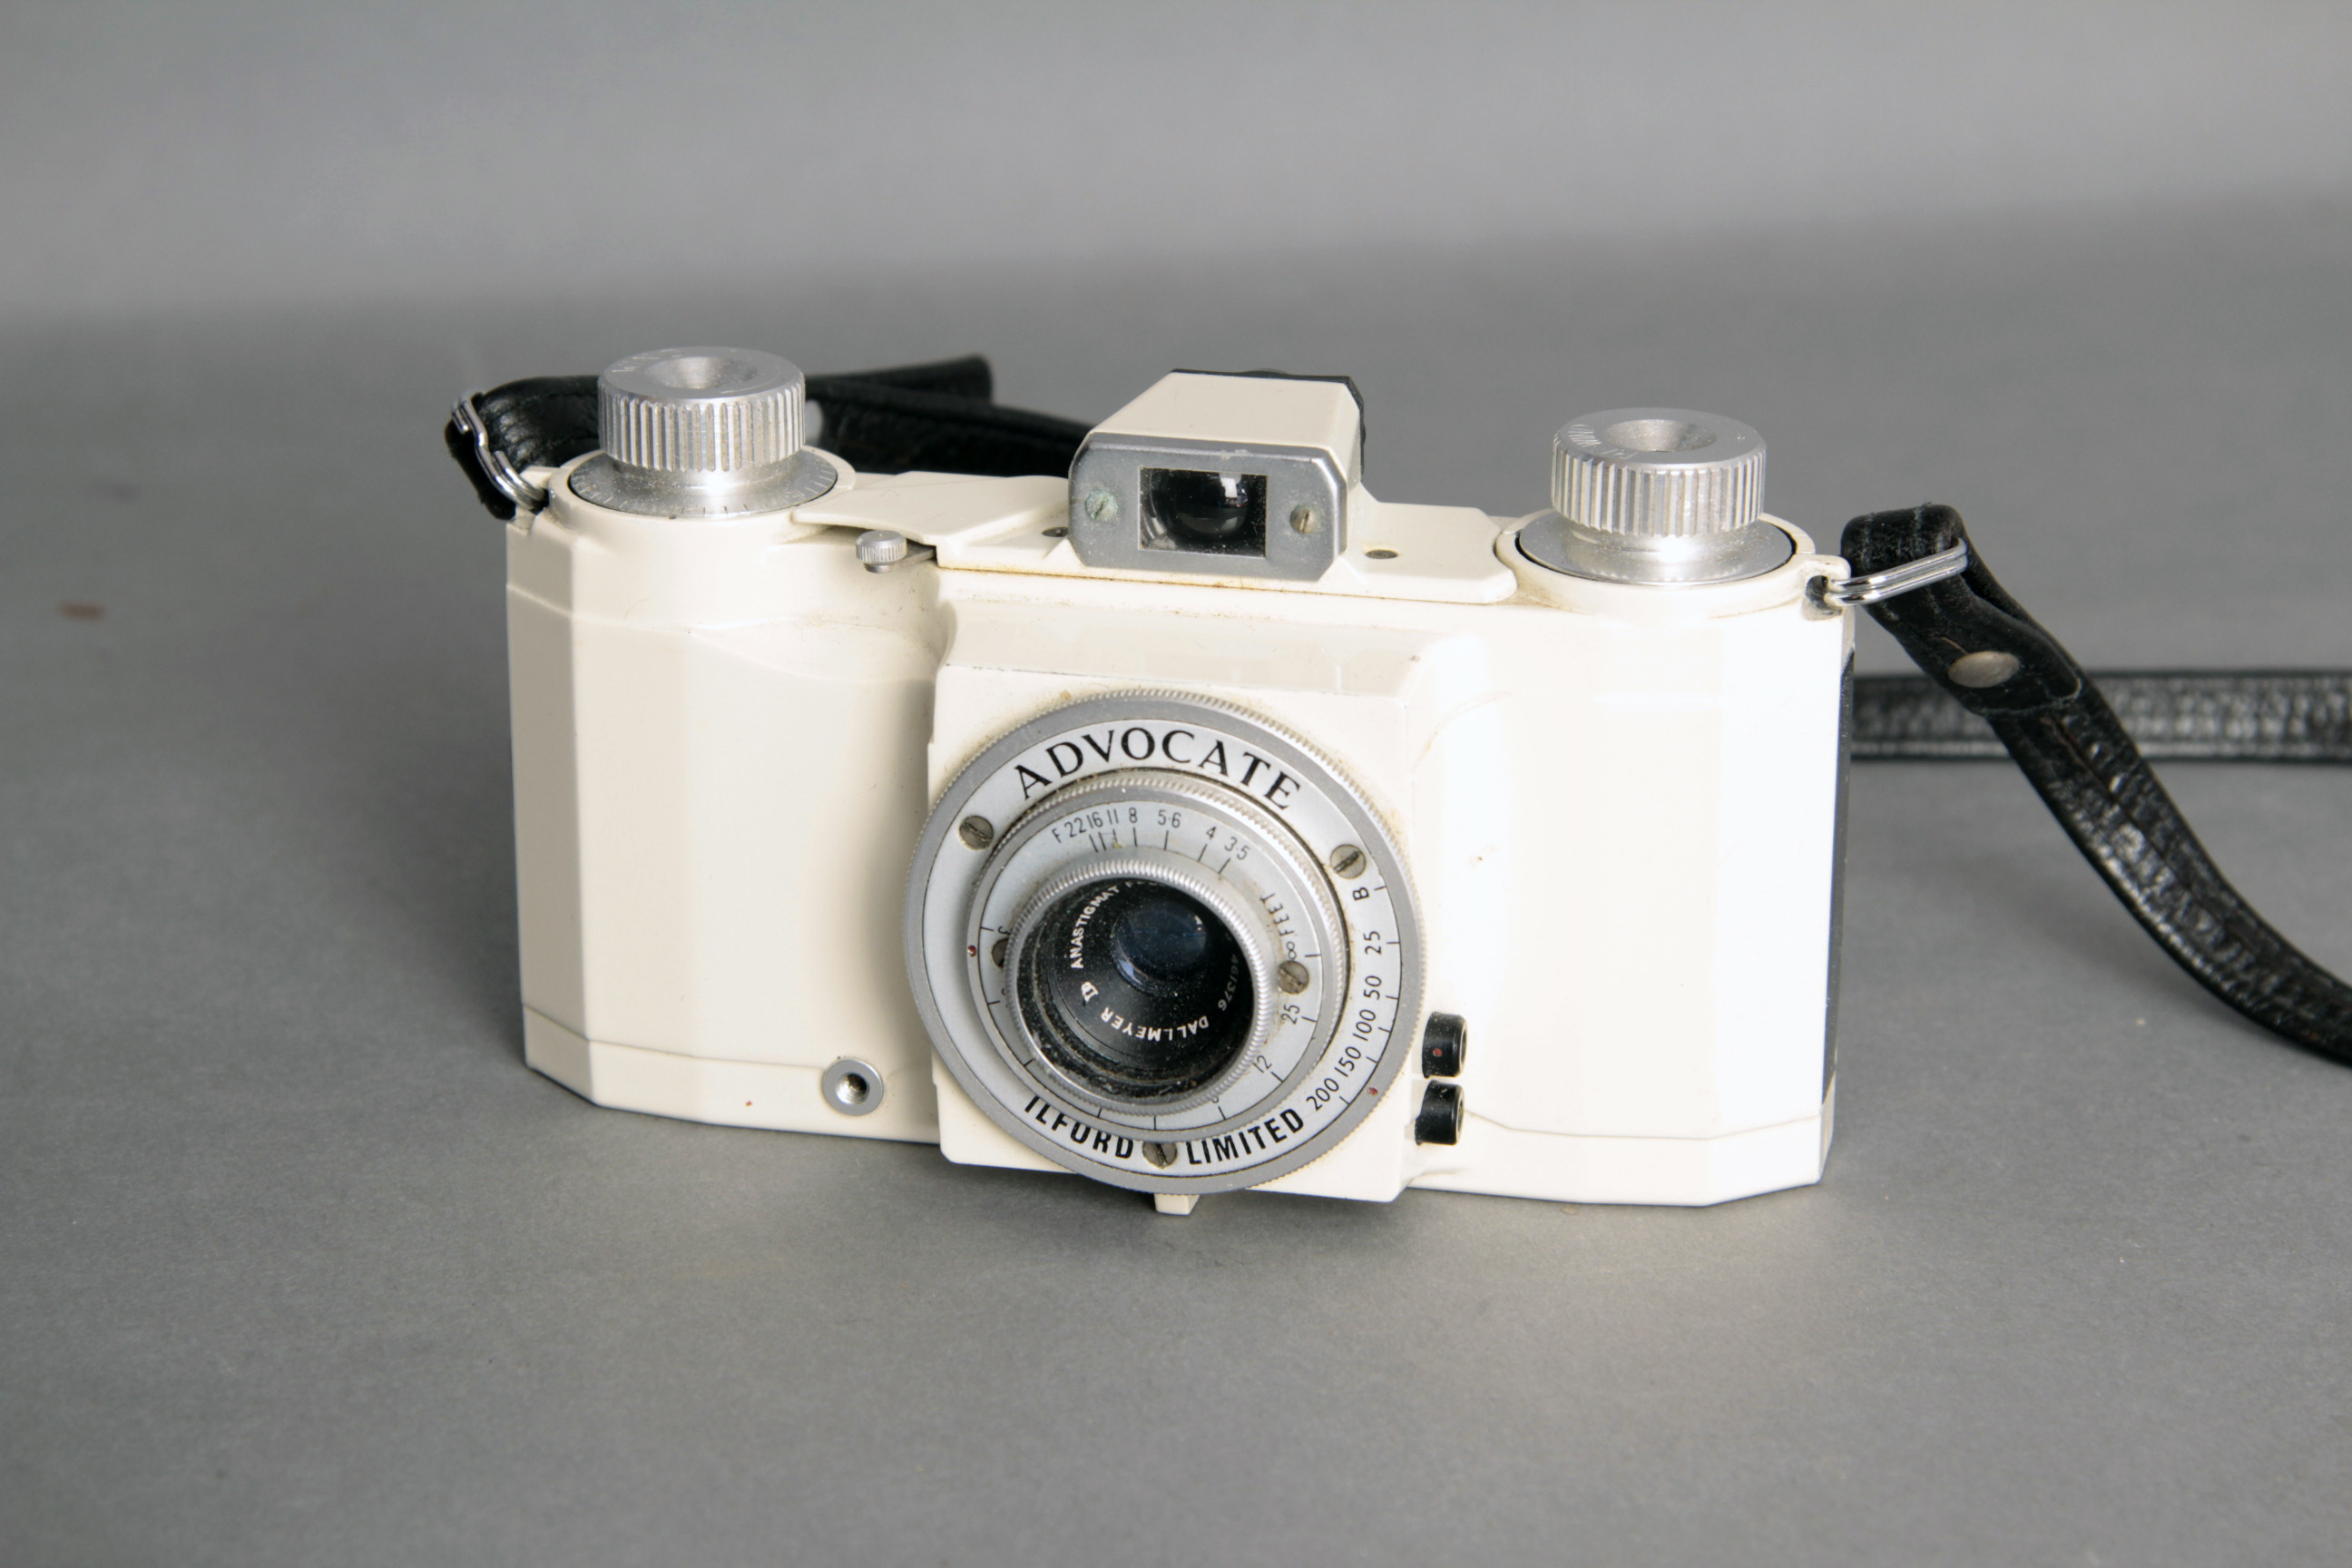 Ilford Advocate Camera, with Dallmeyer f/3.5 35mm lens